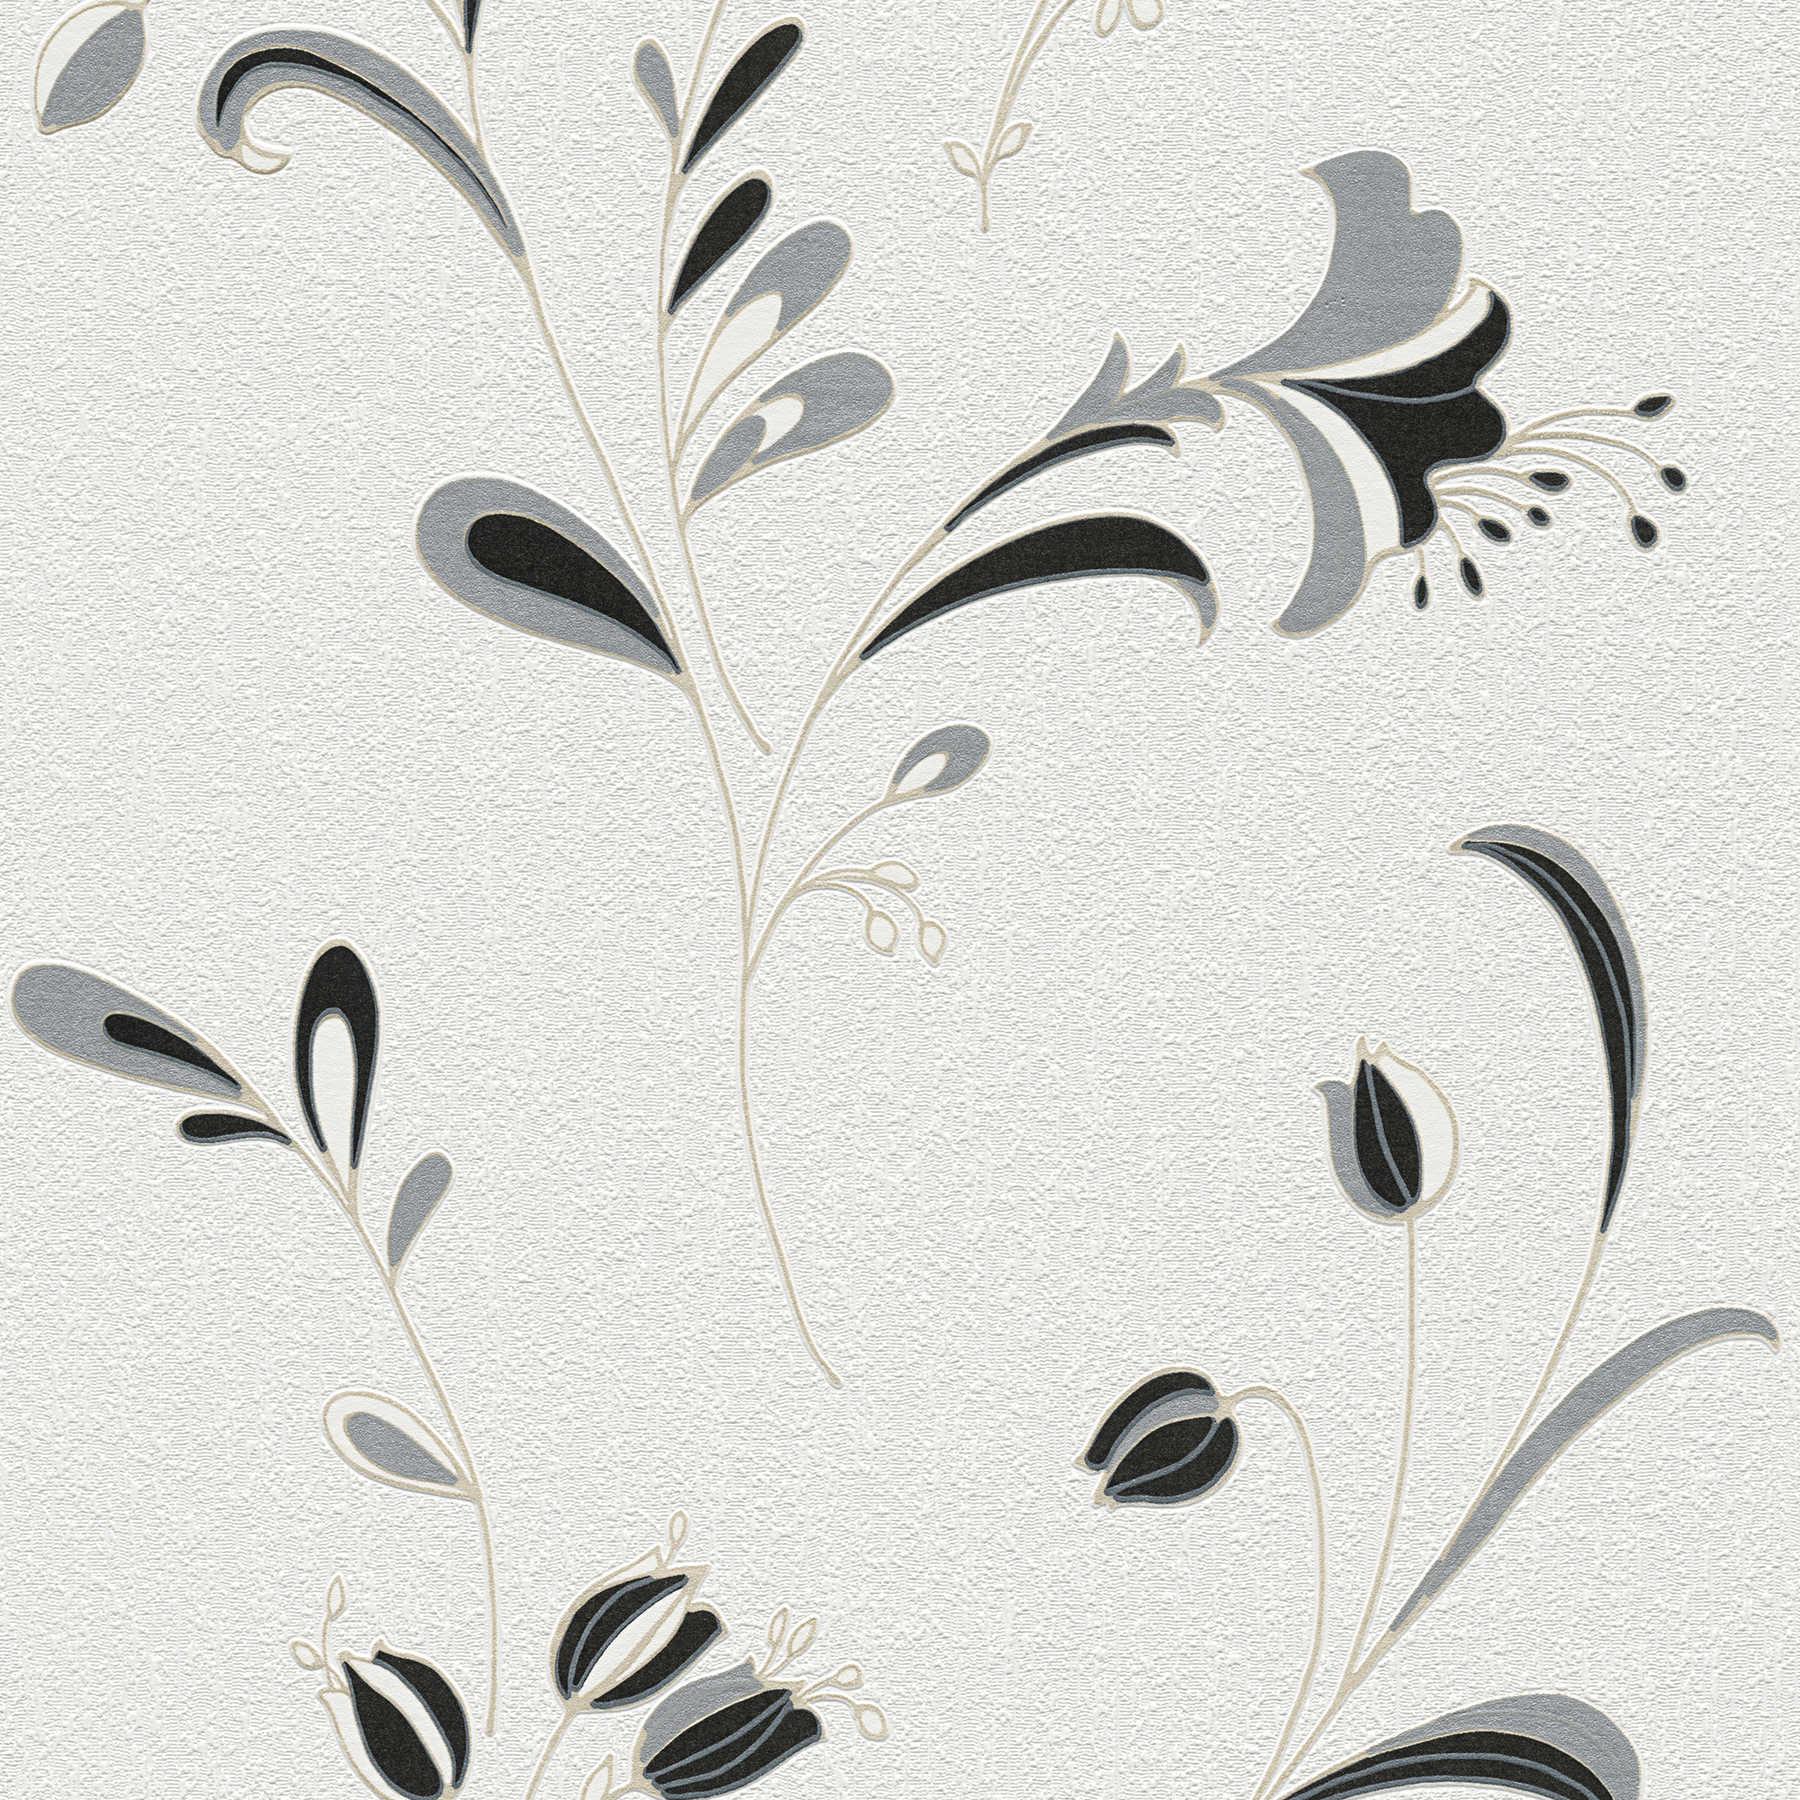 Wallpaper floral motif, silver accents & texture pattern - black, white, silver
